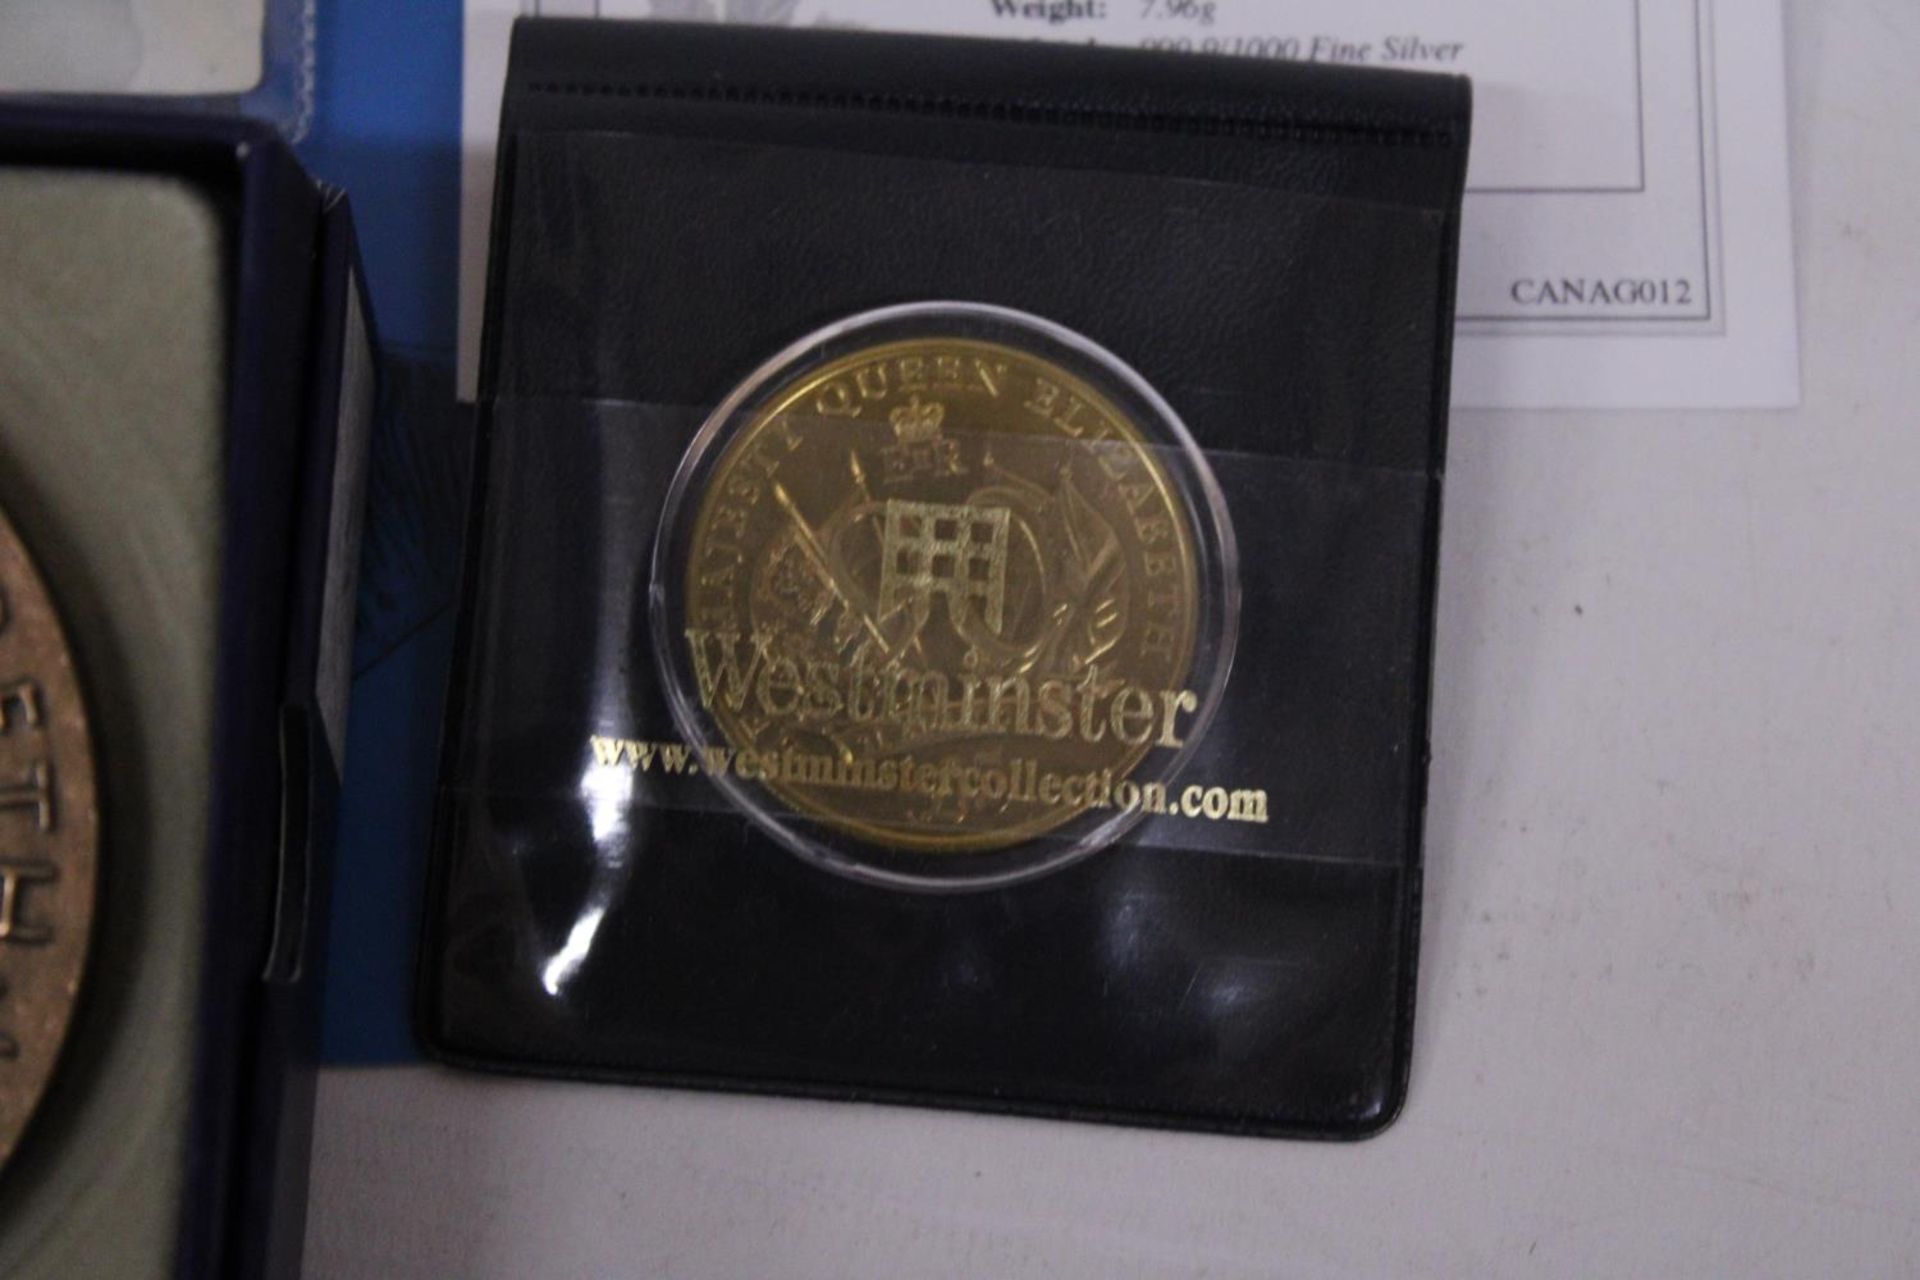 A COLLECTION OF COINS TO INCLUDE A 2014 CANADA GOOSE FINE SILVER $20 COIN, A MONNAIE DE PARIS S.M. - Image 3 of 6